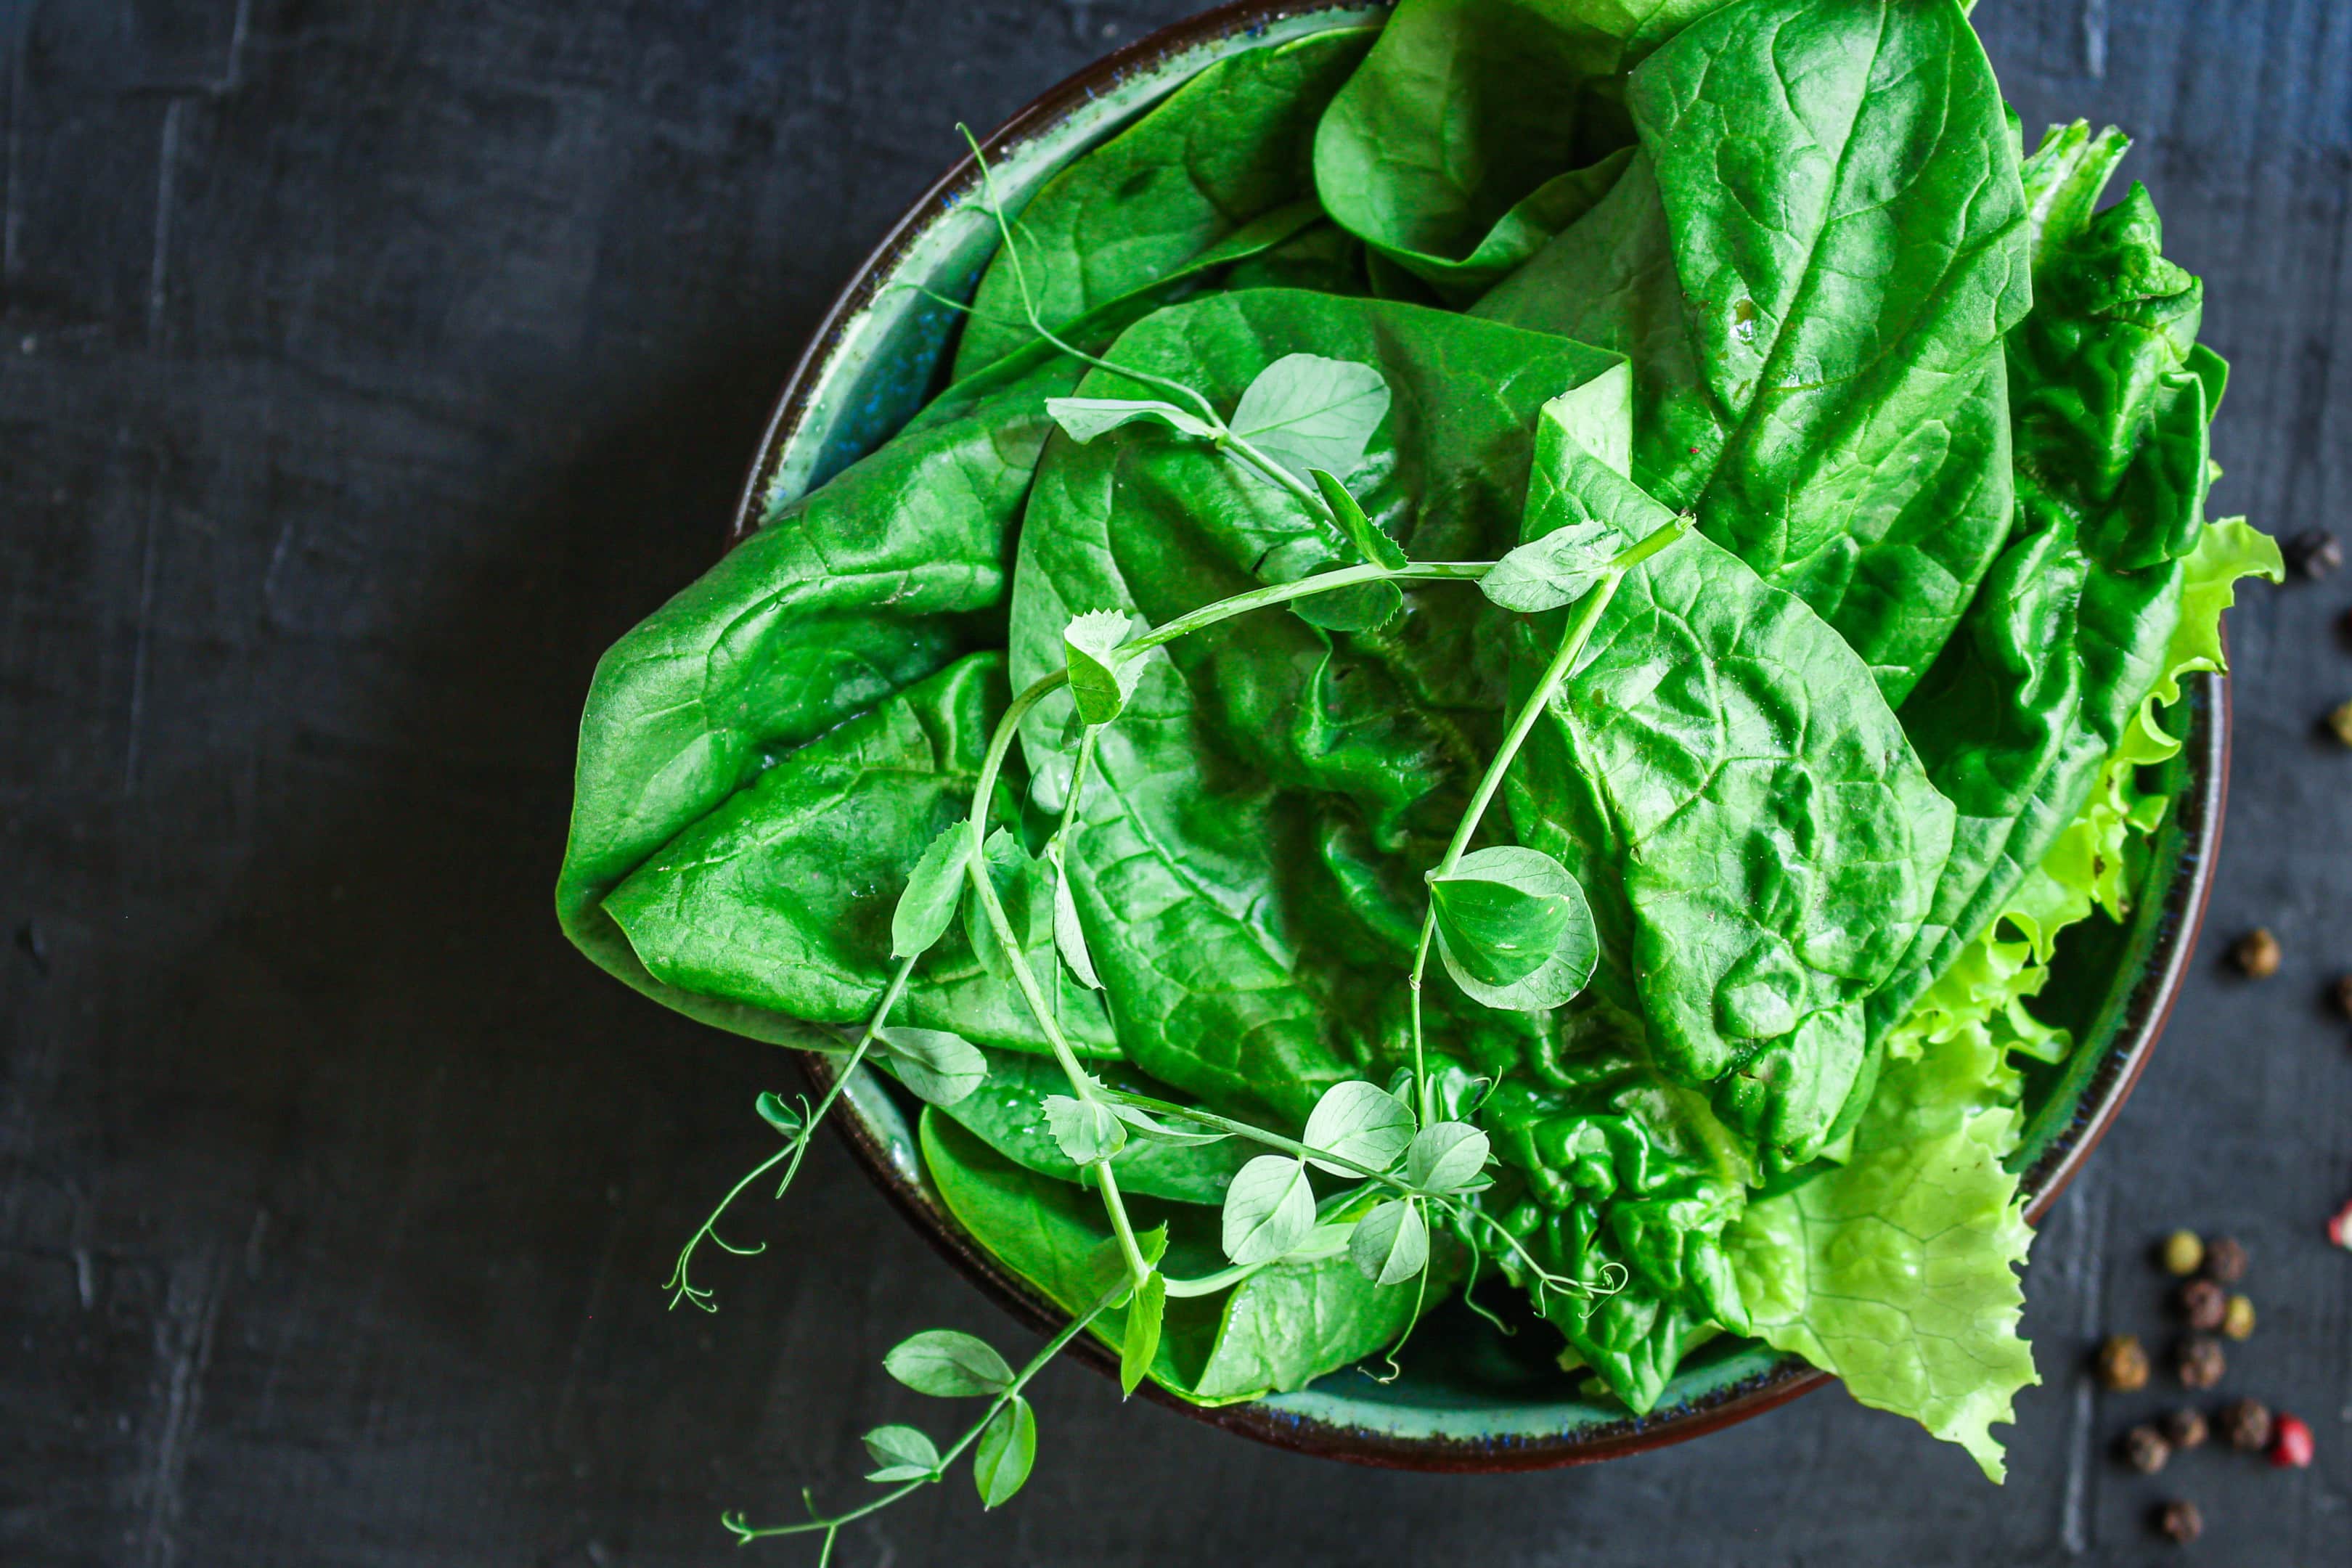 Green salad of spinach arugula lettuce microgreen in ceramic plate